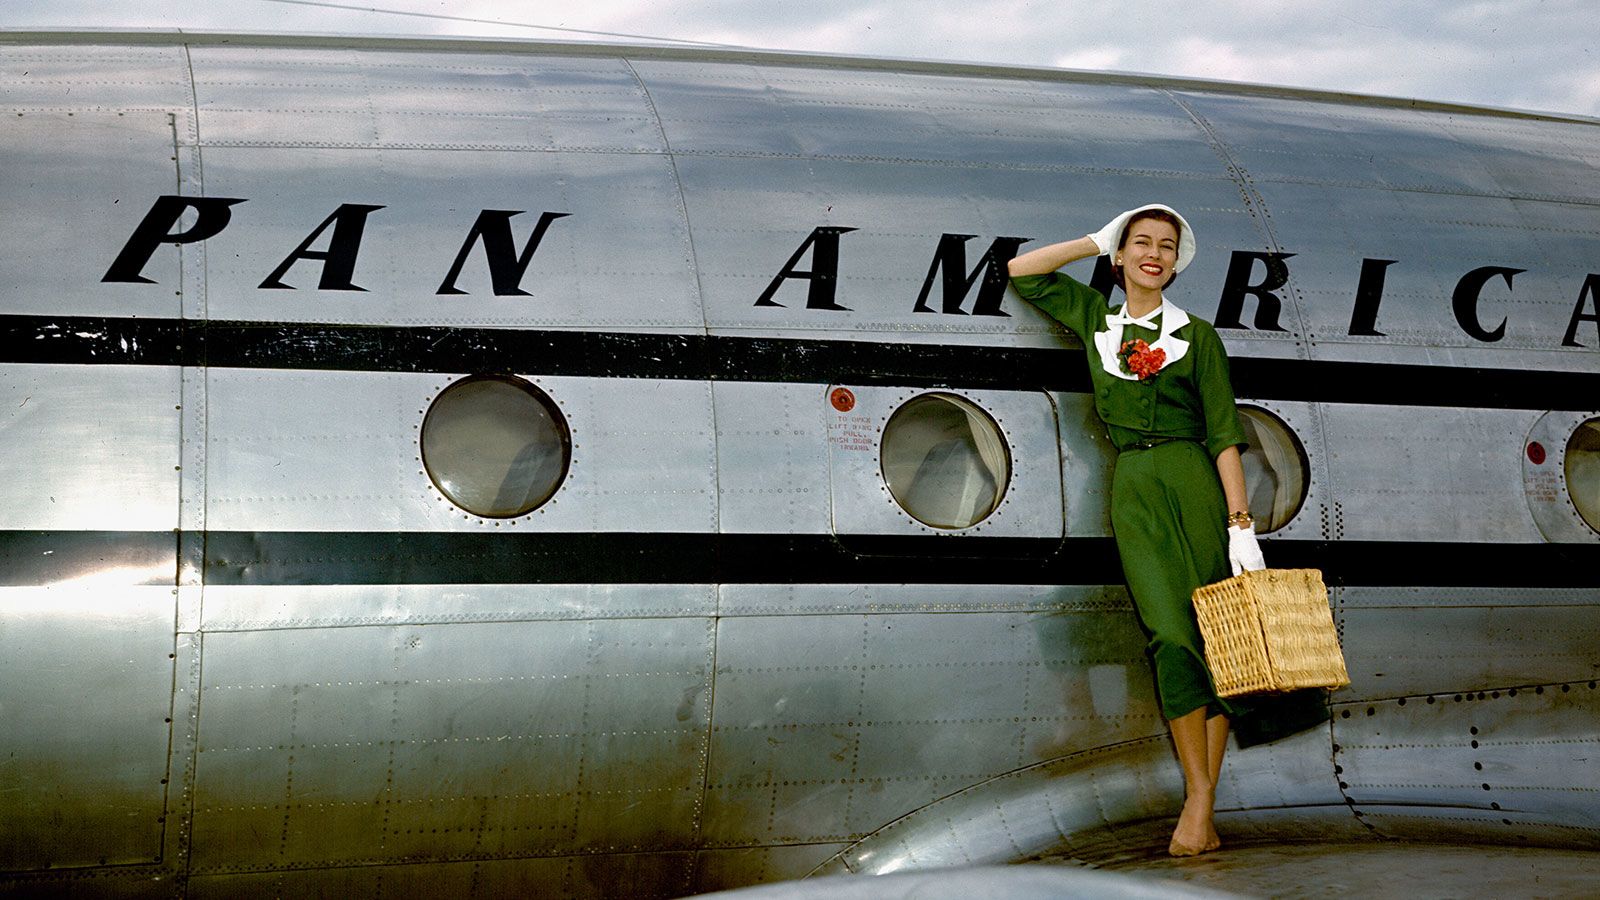 Pan Am: The trailblazing airline that changed international travel | CNN